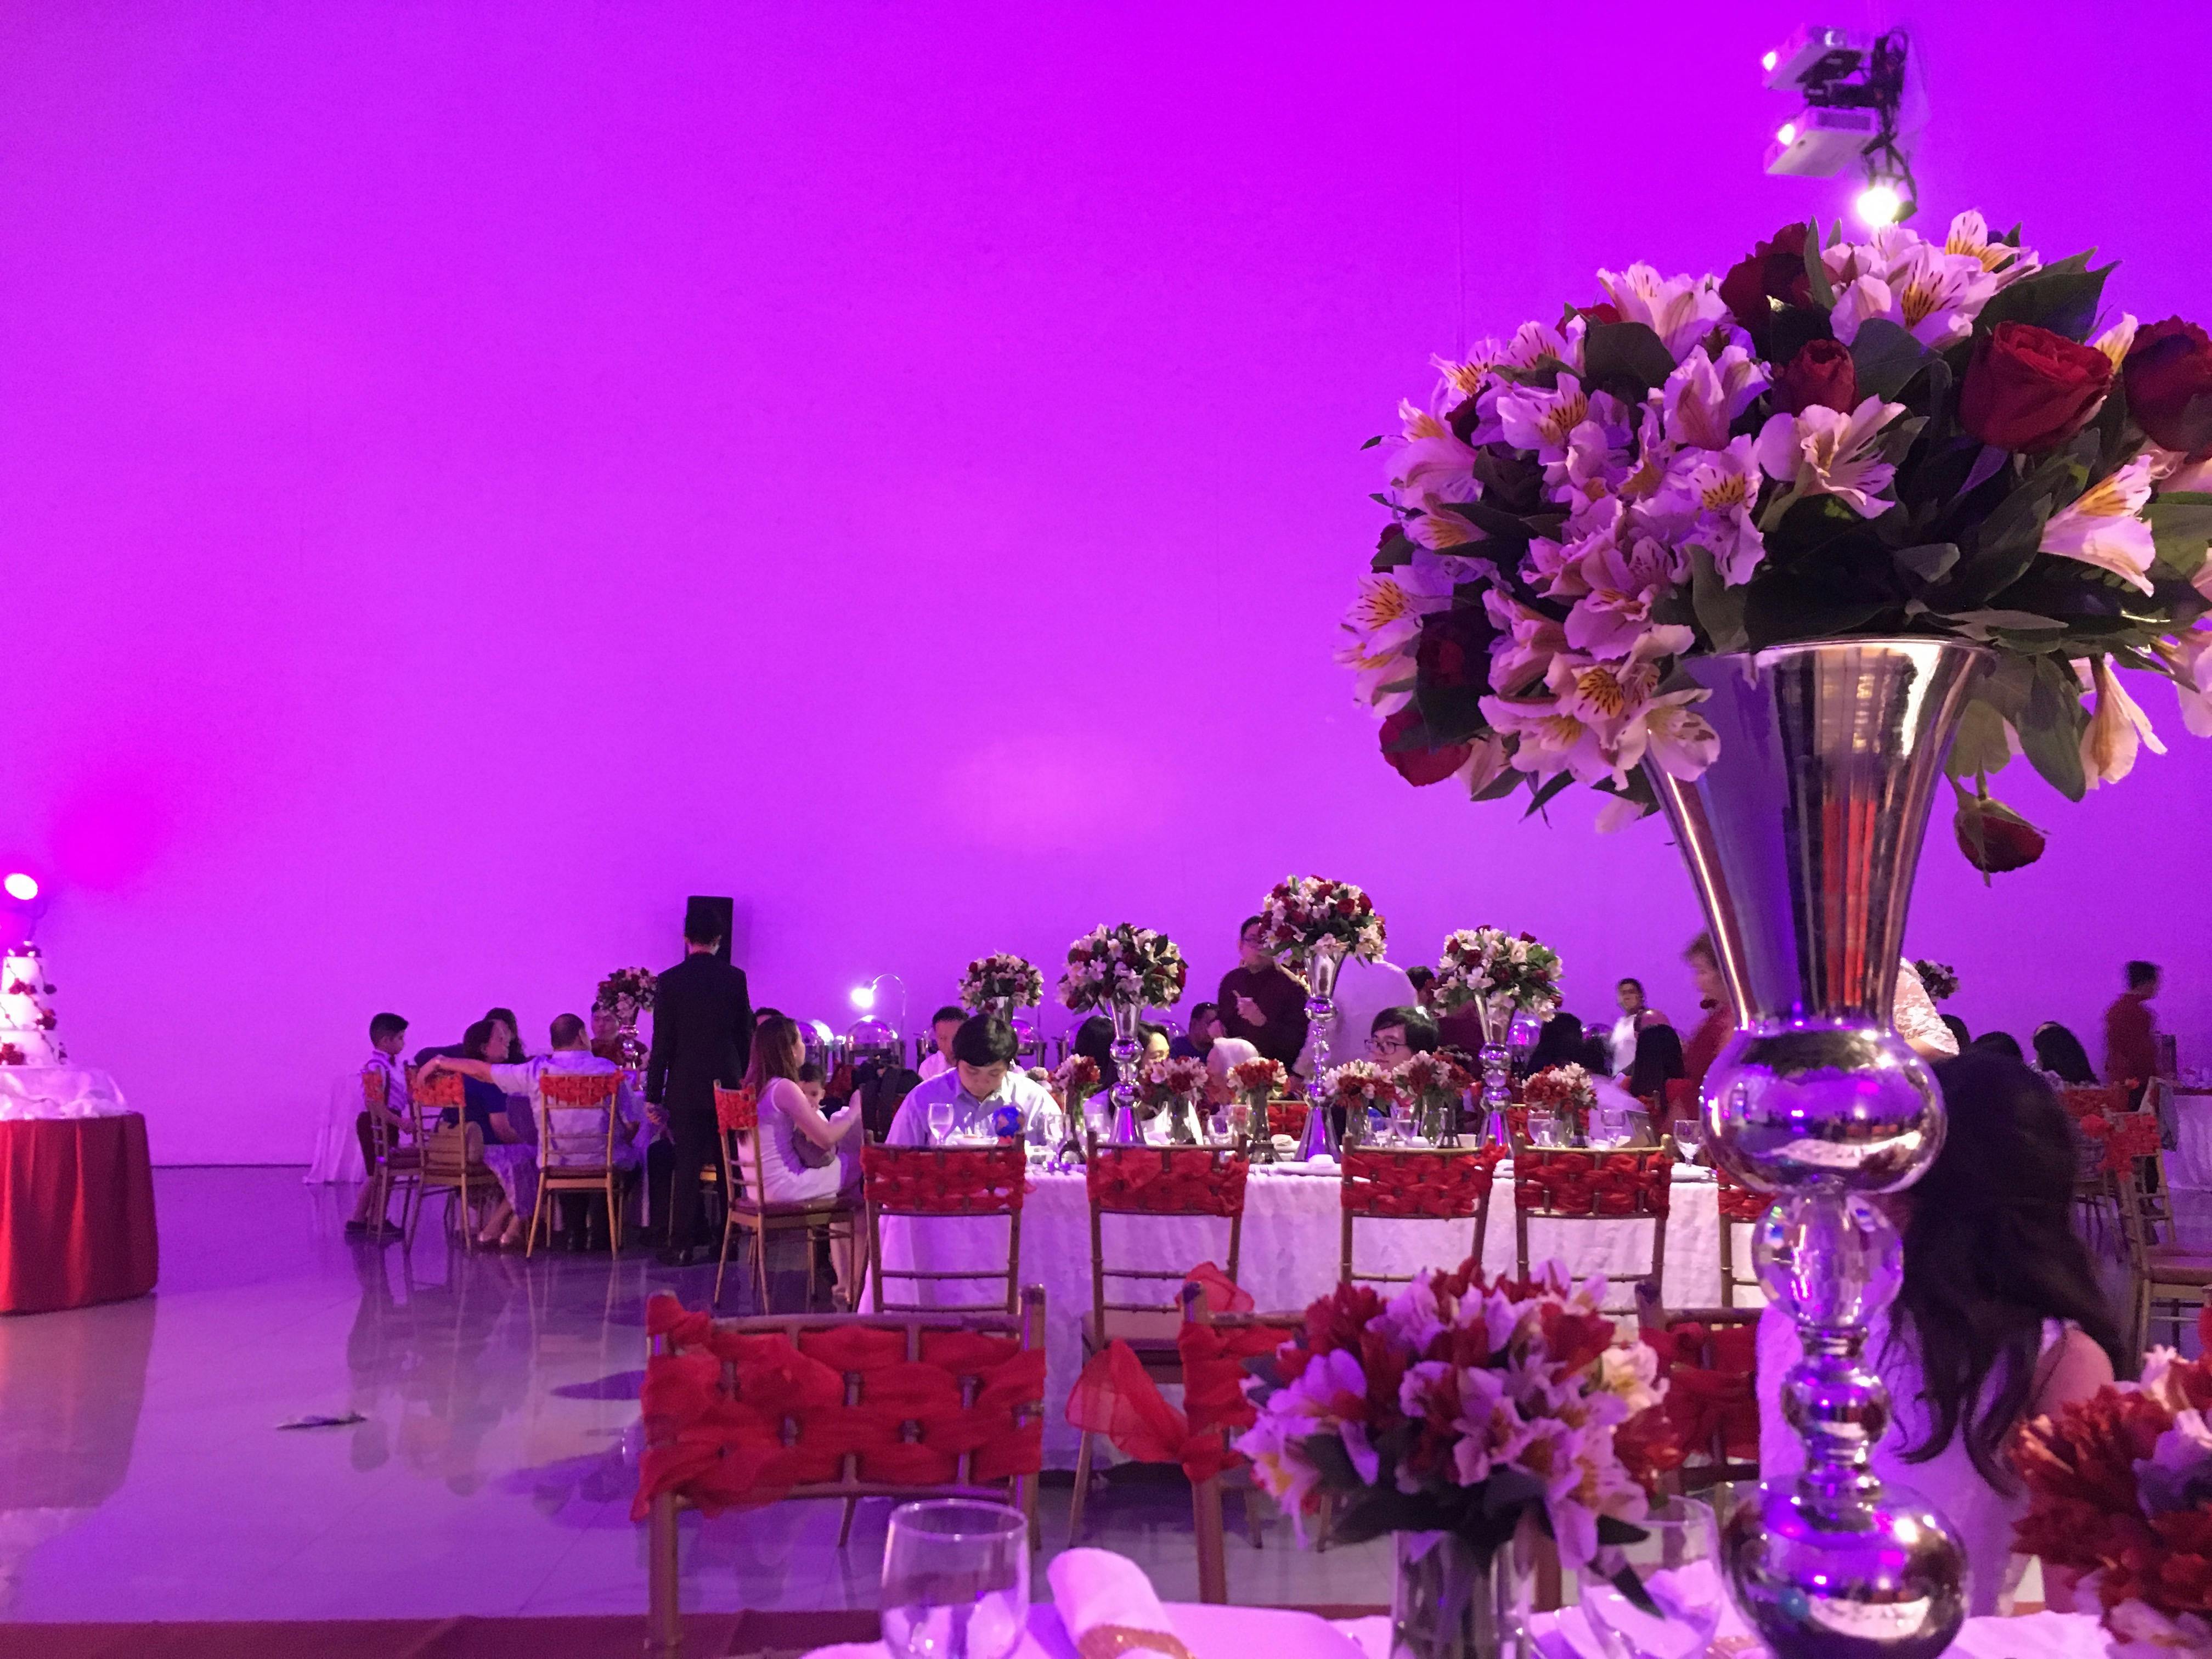 Free stock photo of flower bouquets, purple, wedding banquet